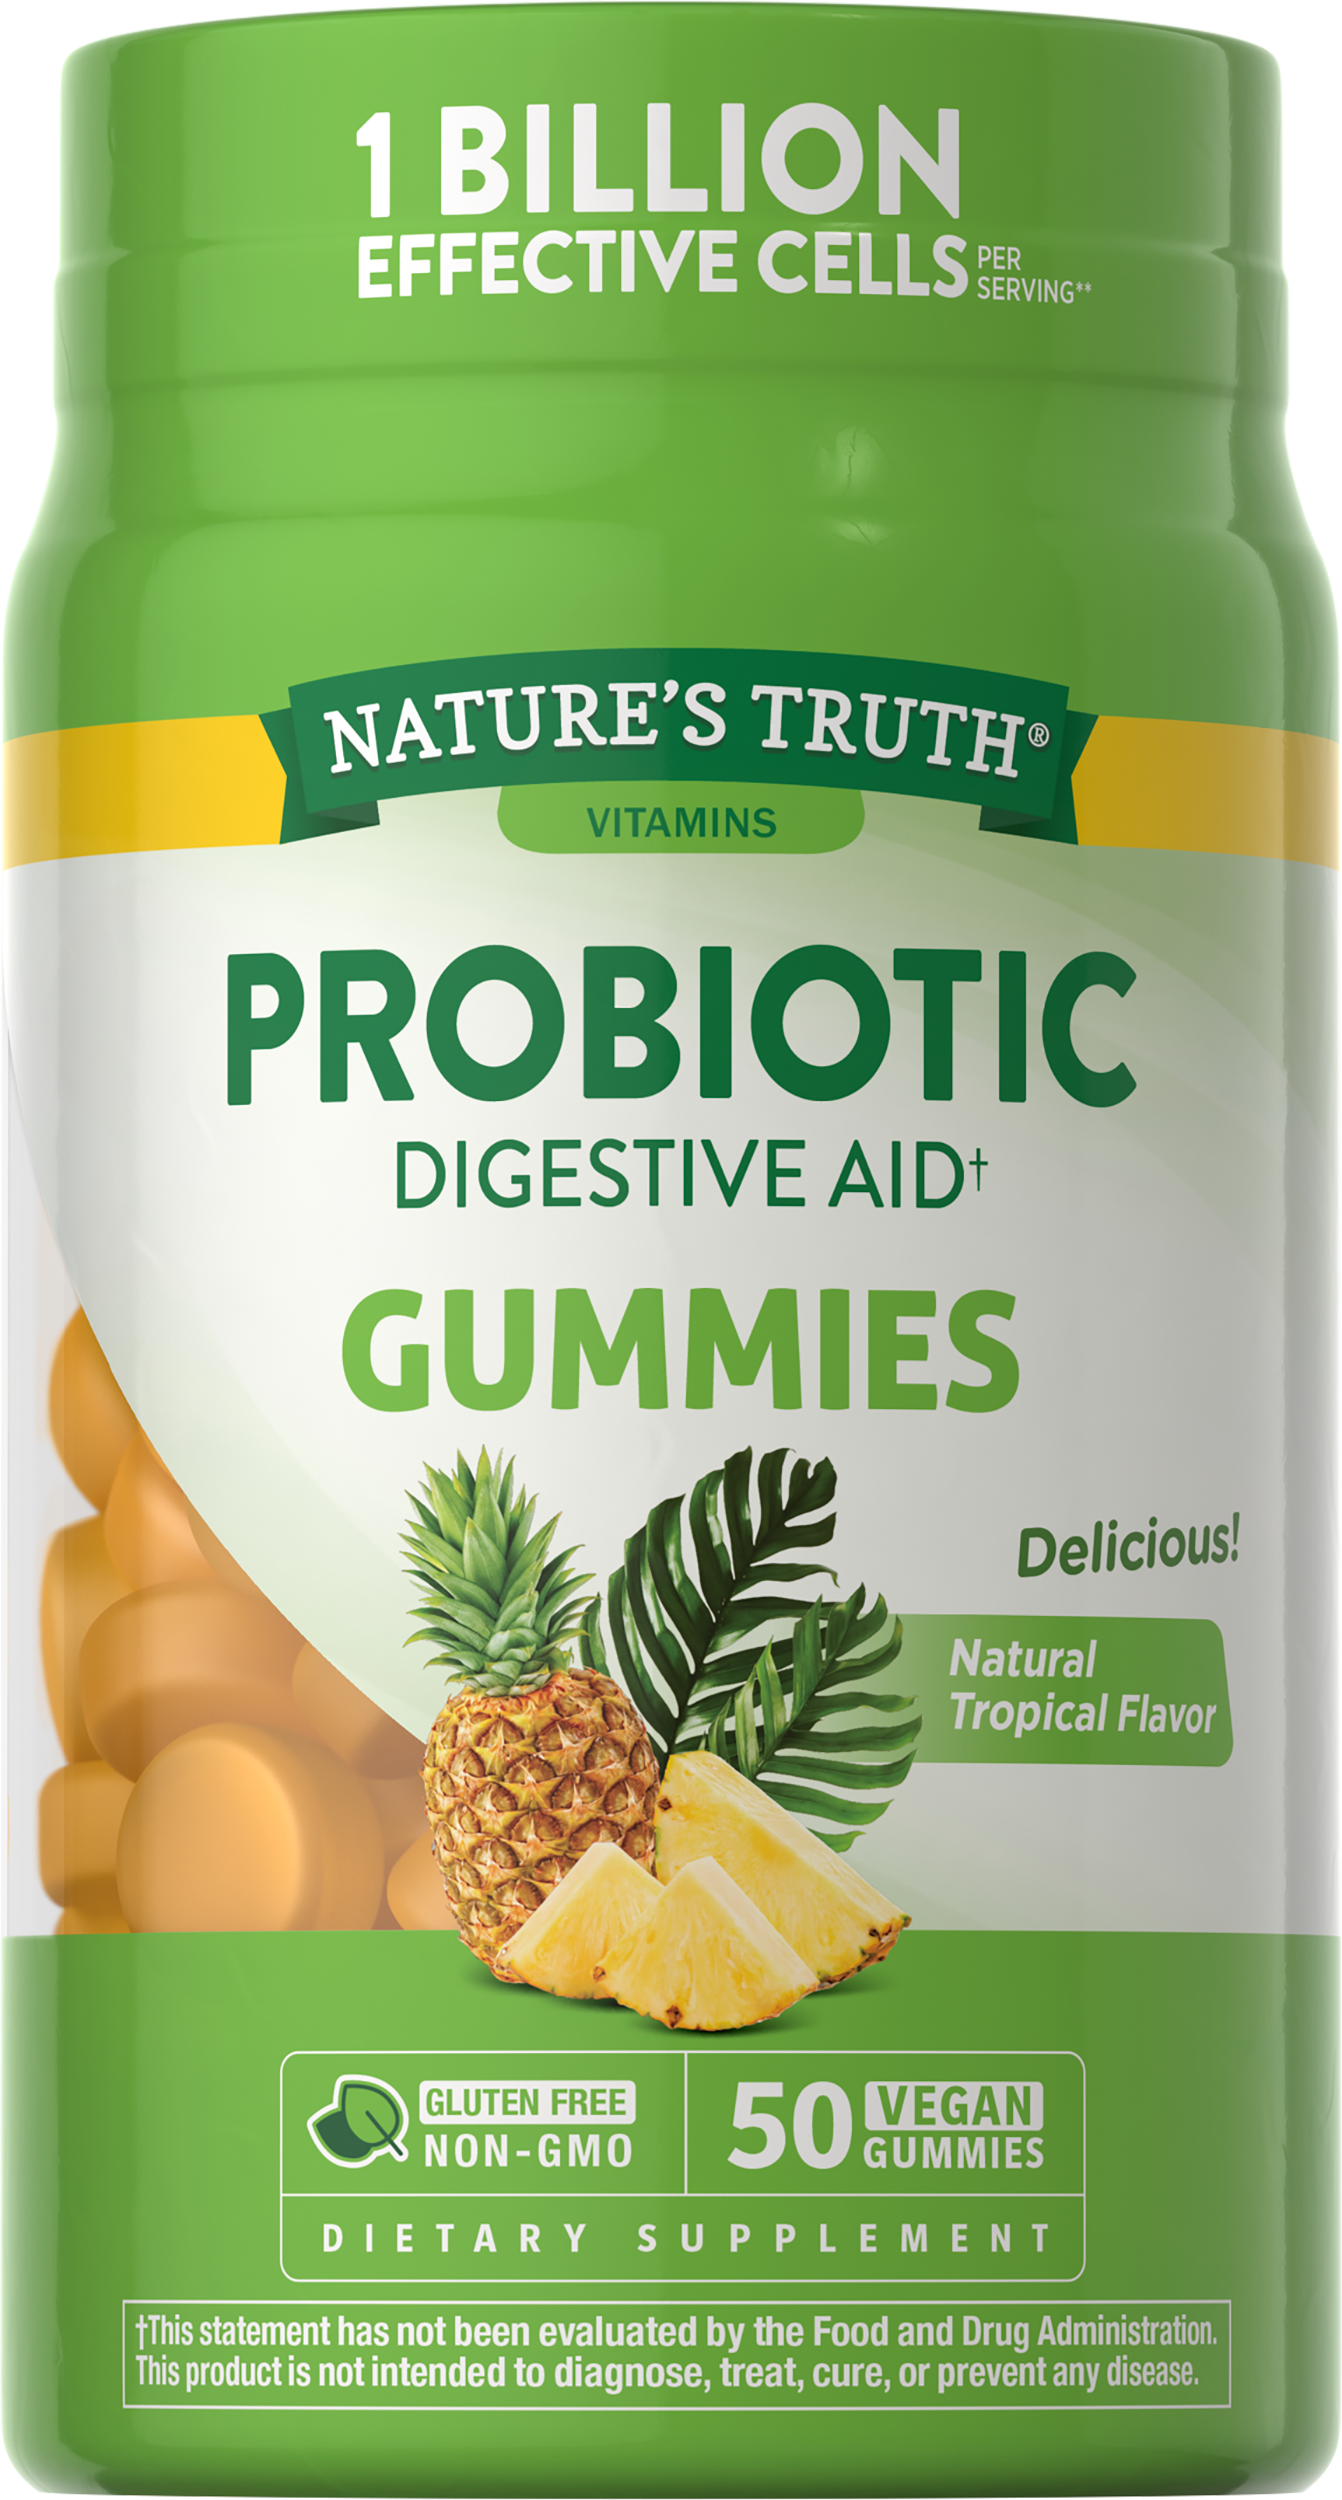 Probiotic Digestive Aid